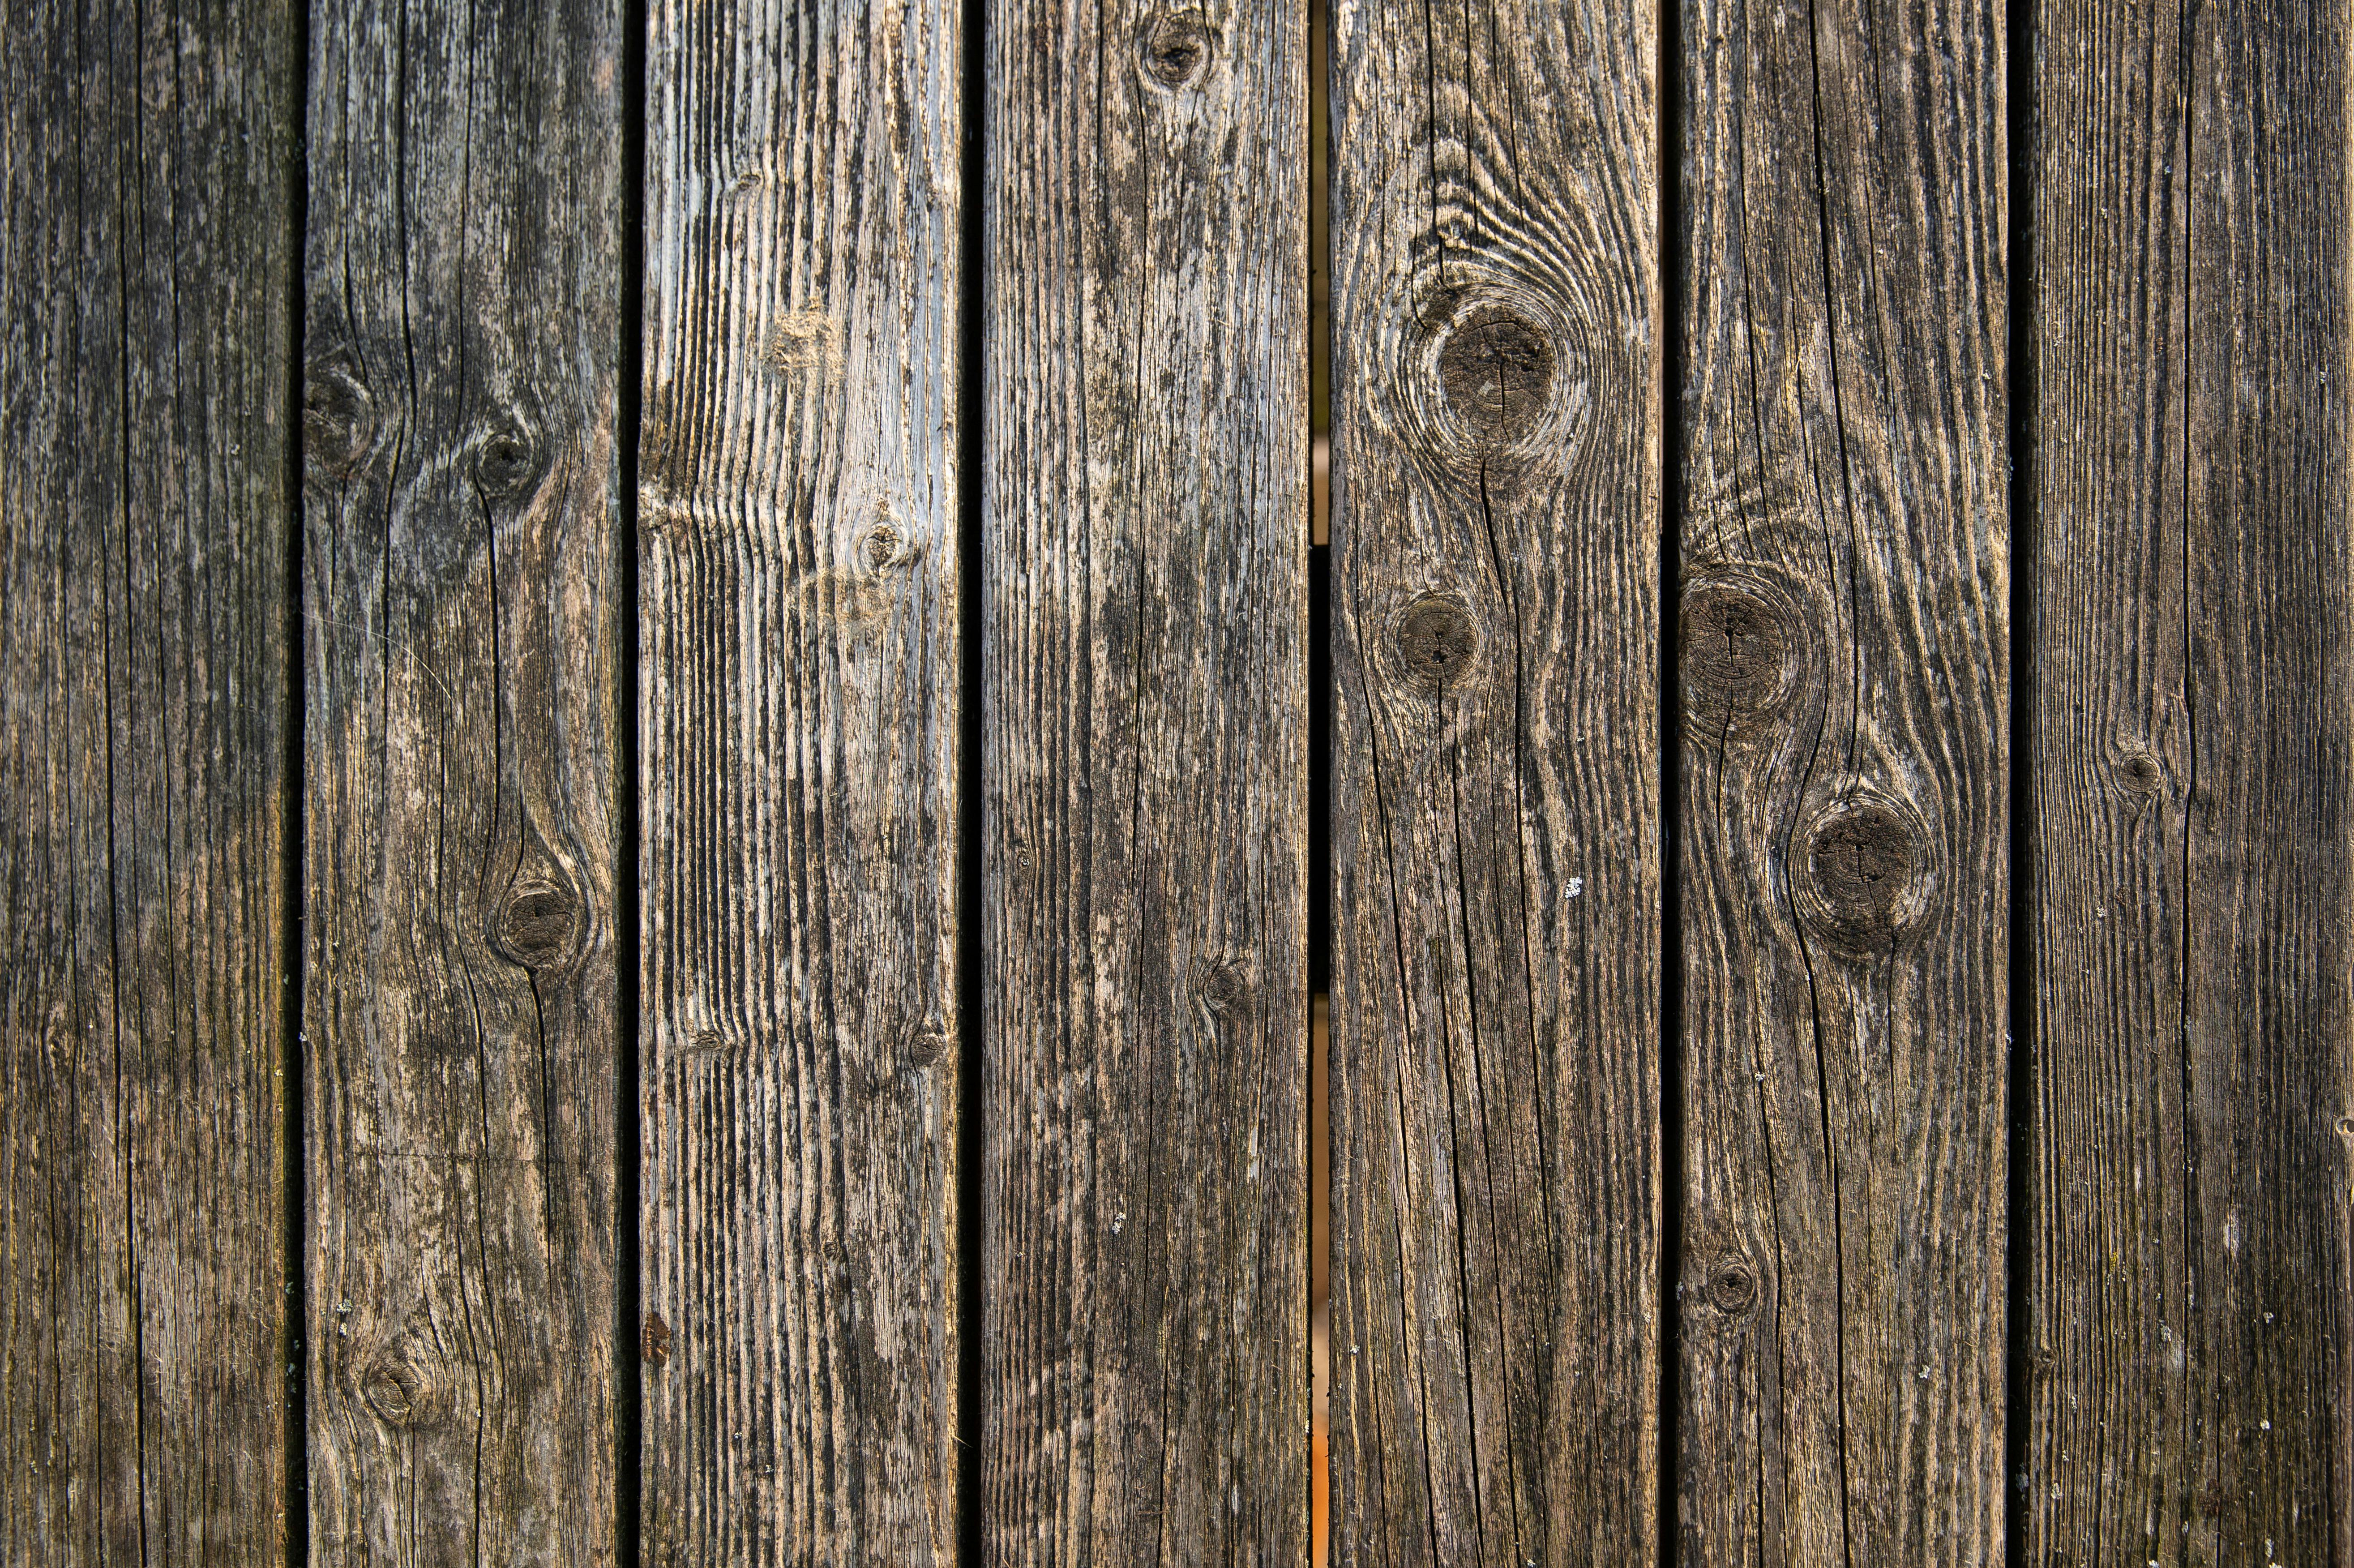 rough wooden texture